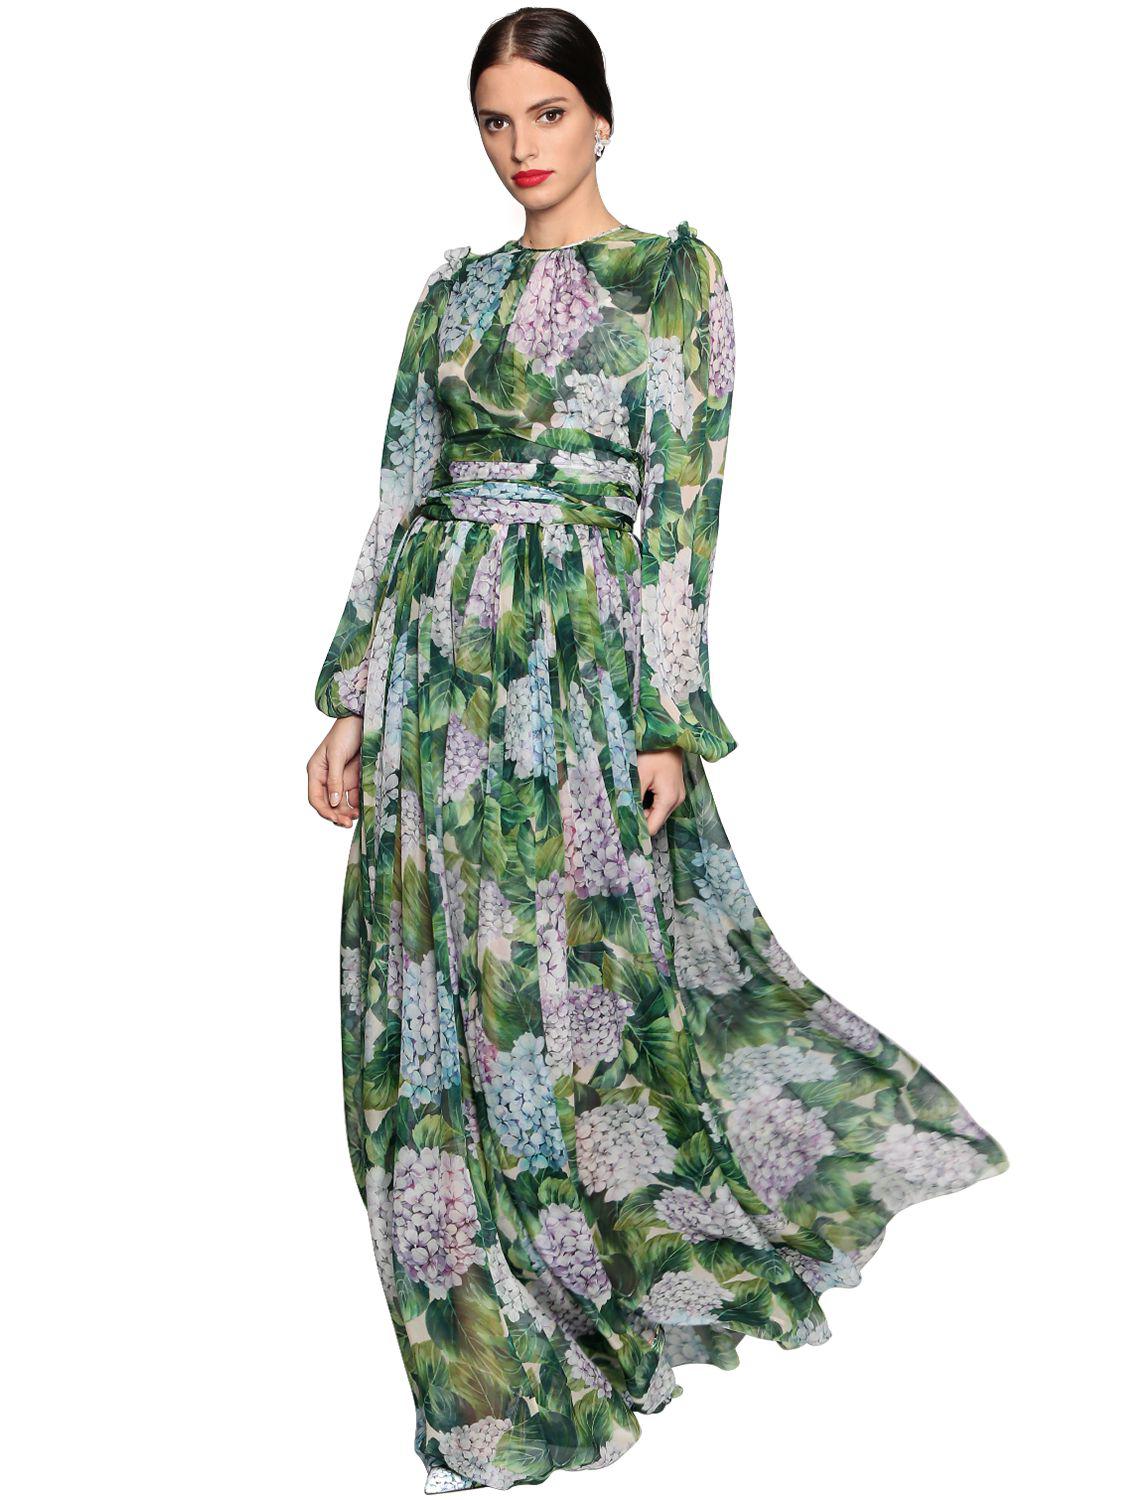 Dolce & Gabbana Hydrangea Printed Silk Chiffon Dress in Green - Lyst